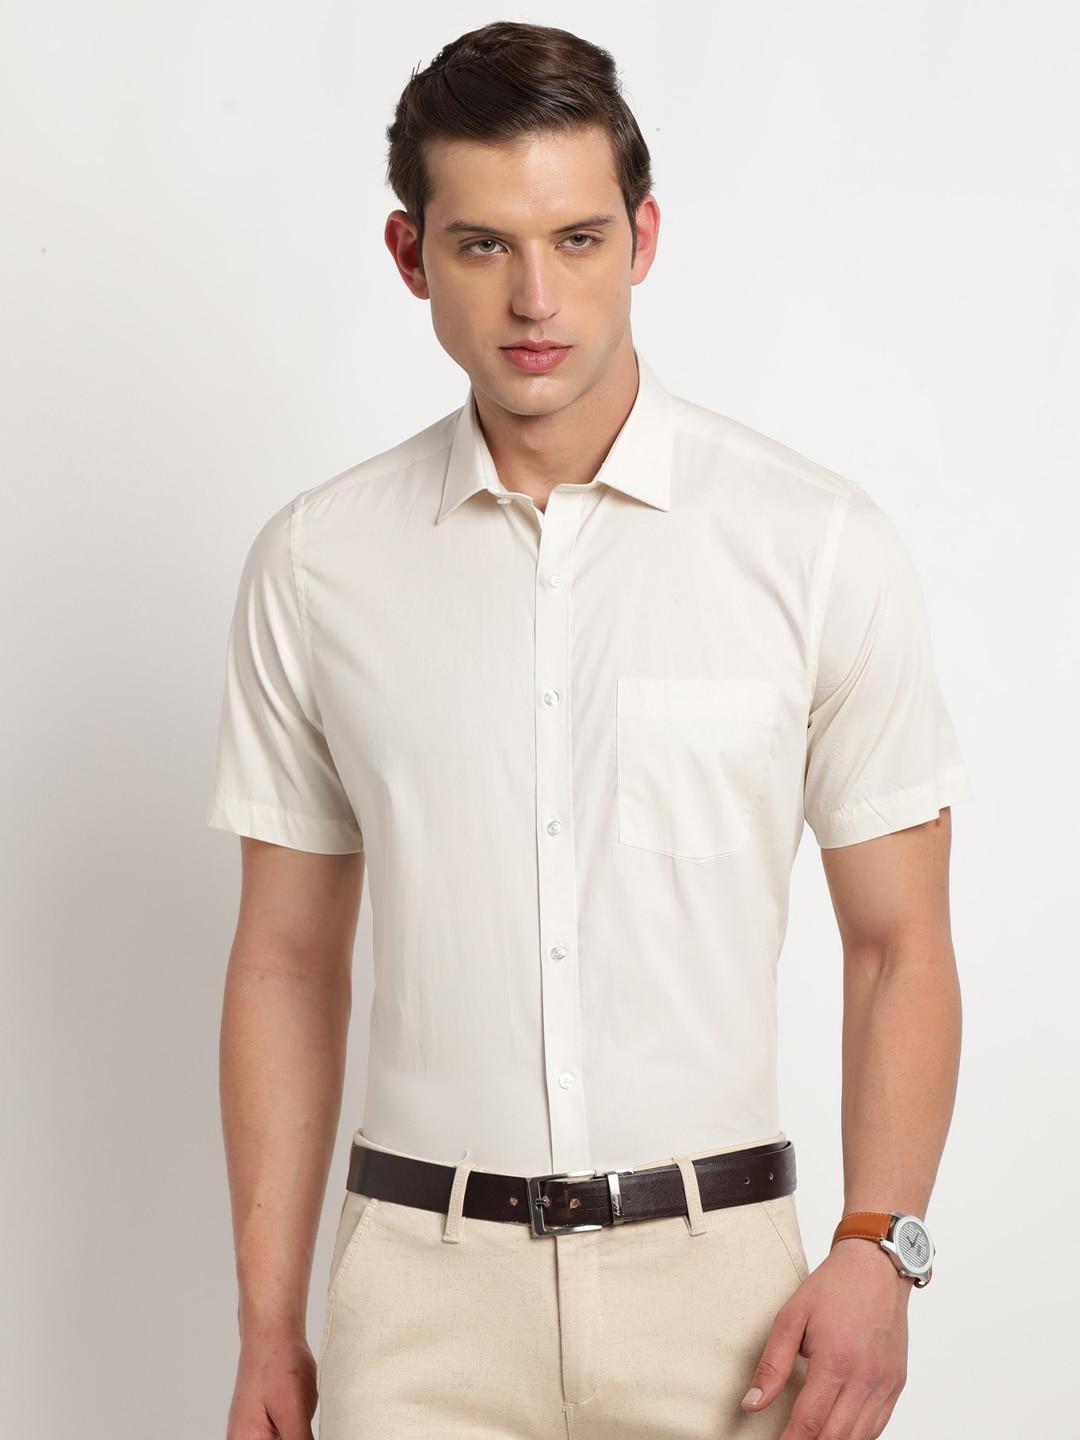 turtle modern spread collar regular fit pure cotton formal shirt